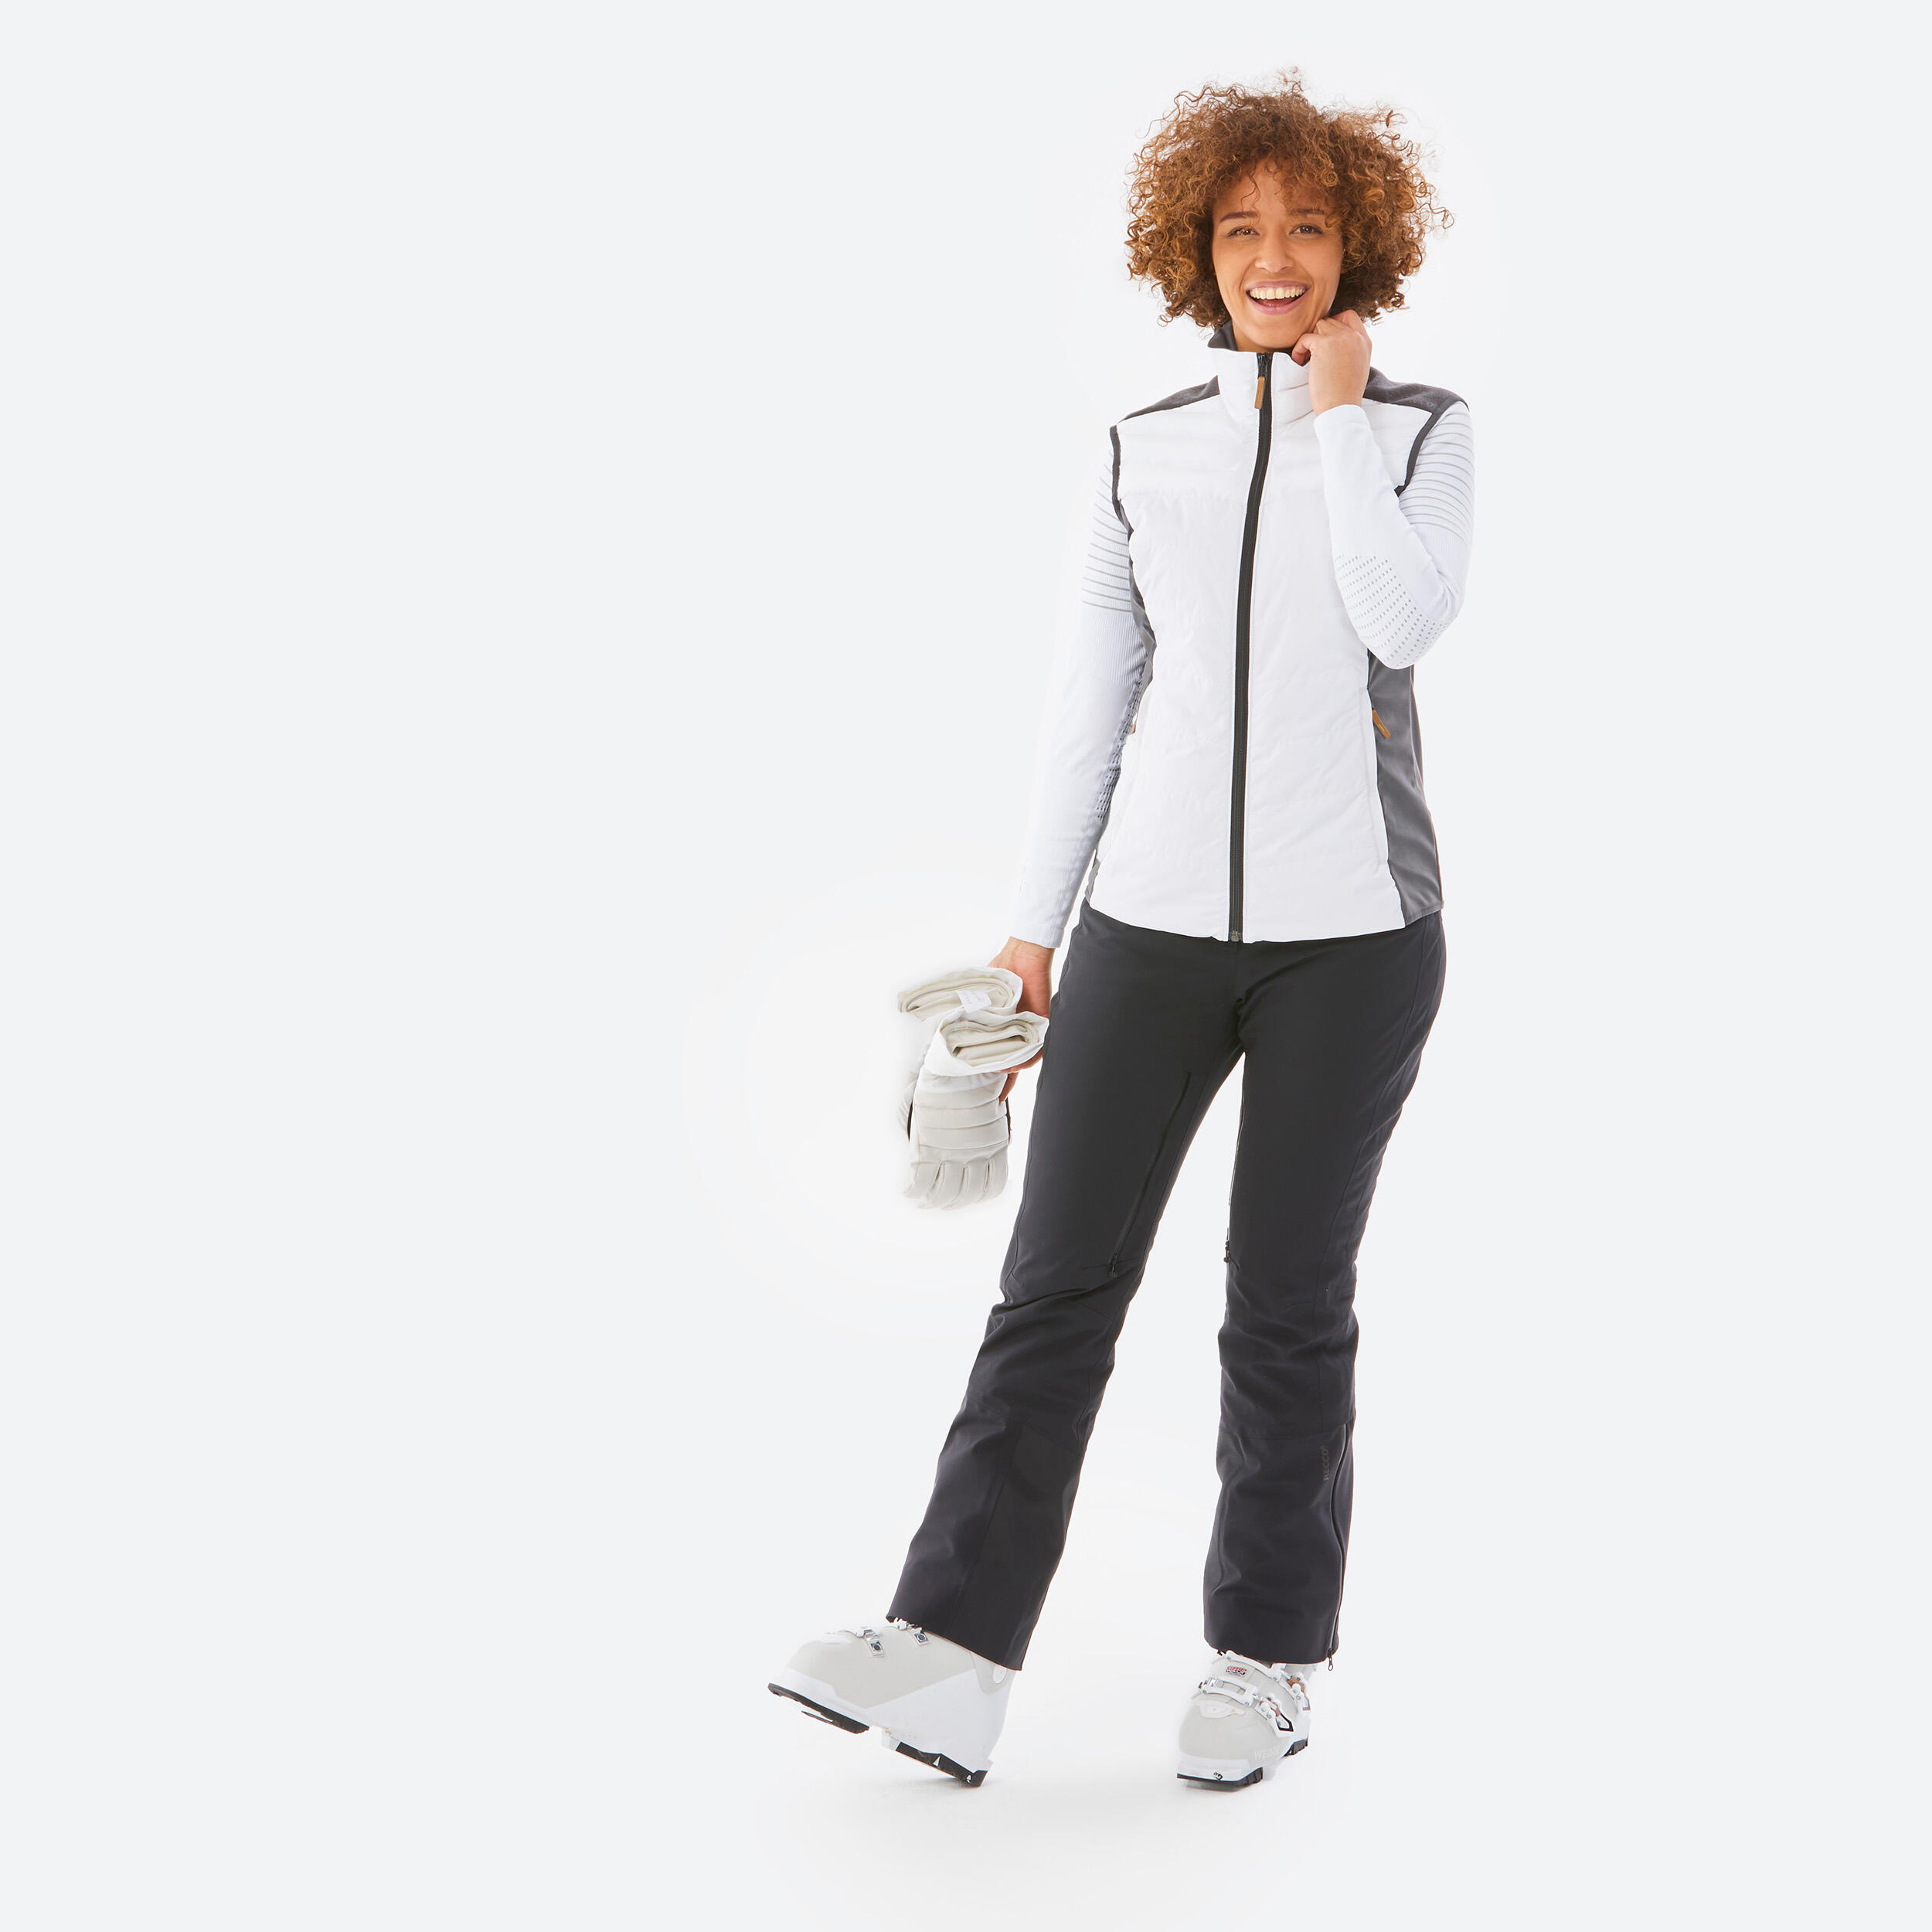 Women’s Sleeveless Jacket - 500 - White/Grey 7/7